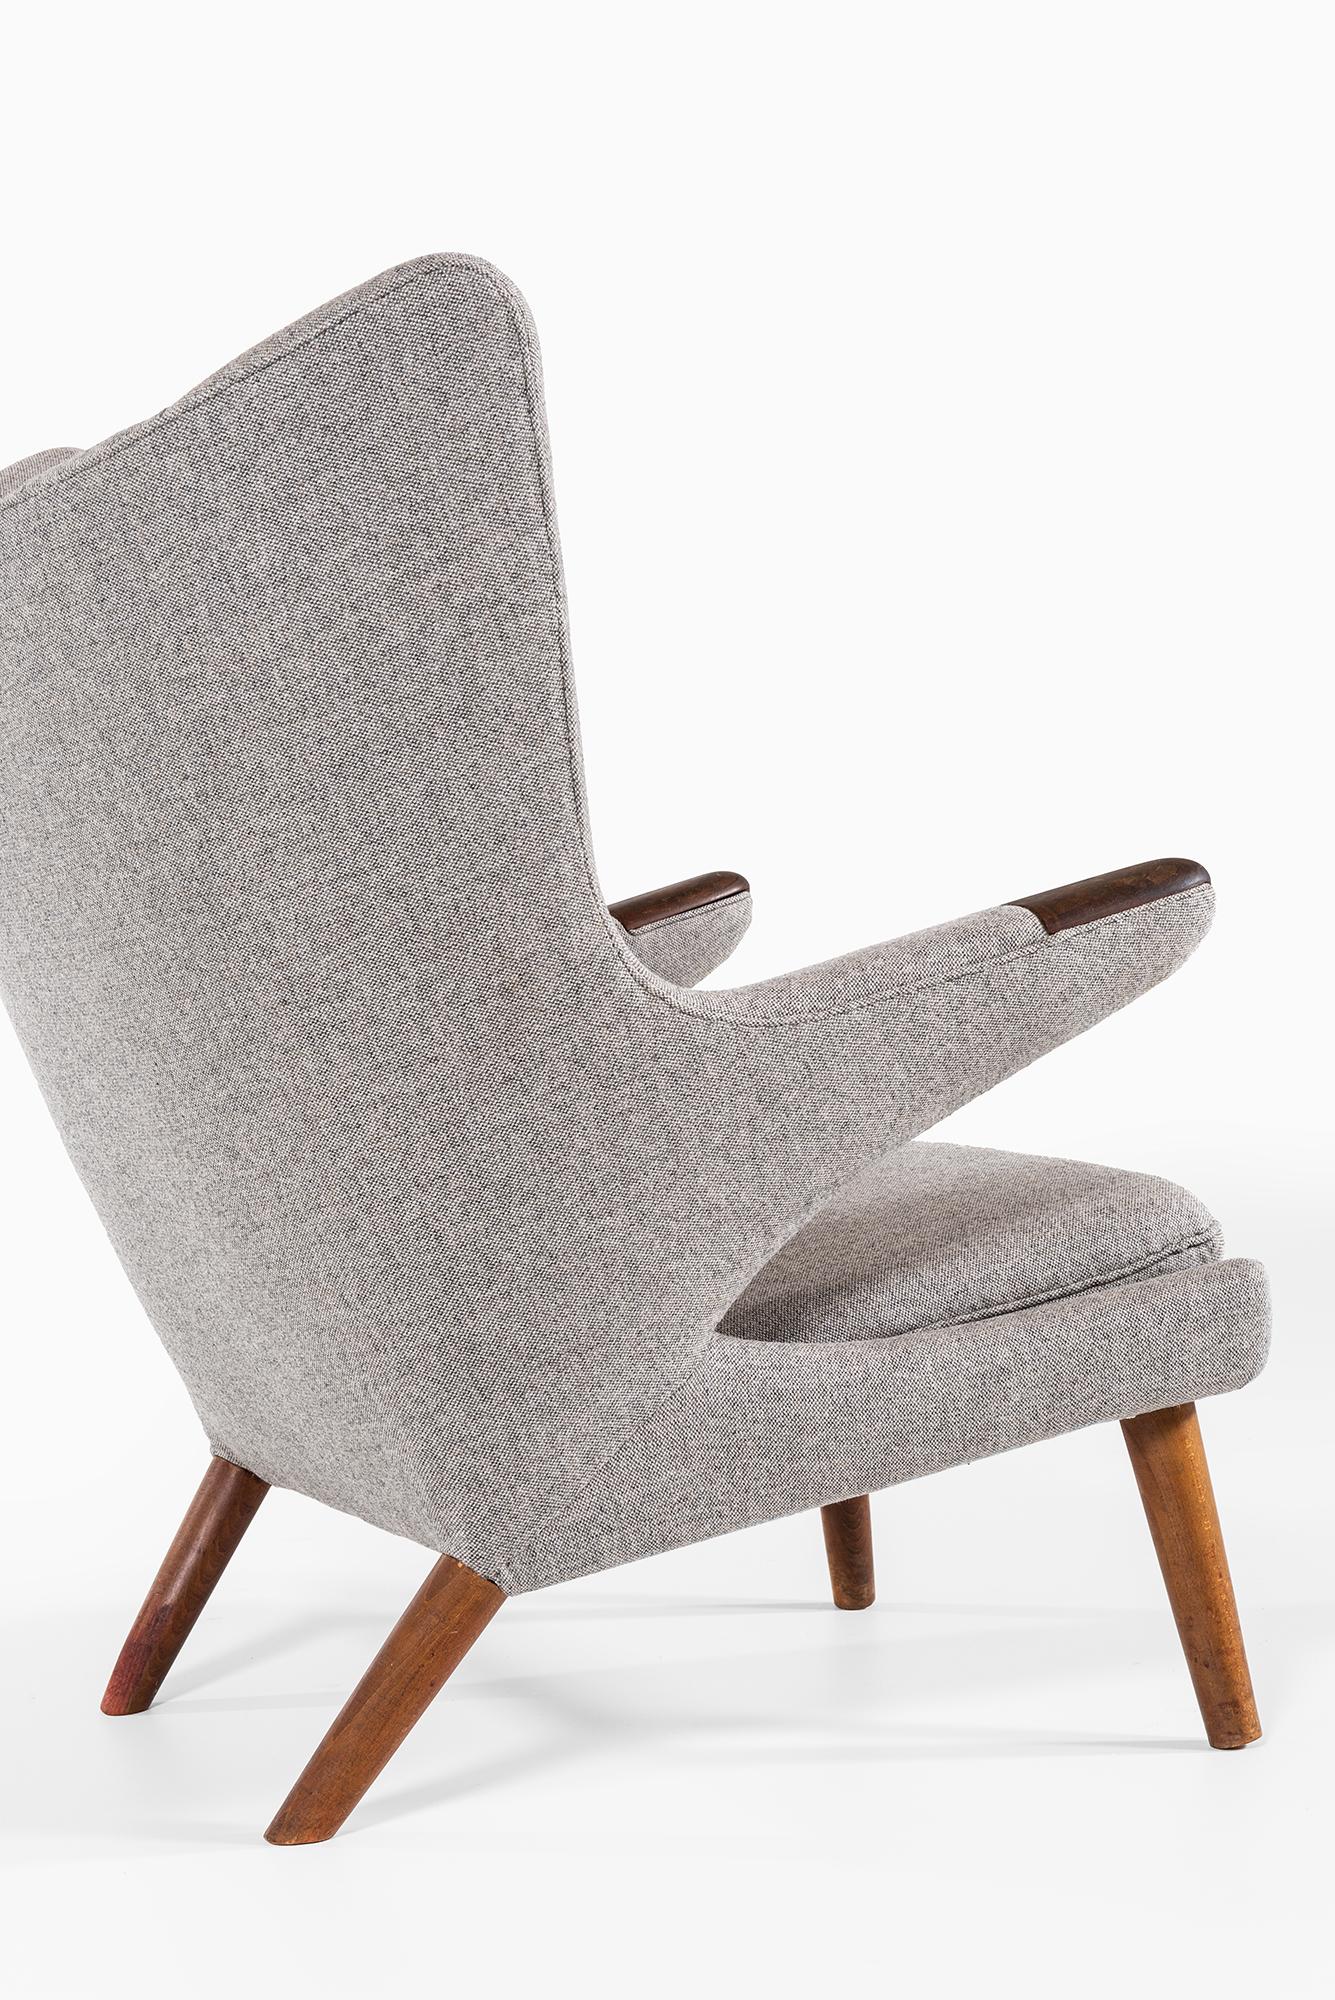 Fabric Hans Wegner Easy Chair Model Papa Bear by A.P Stolen in Denmark